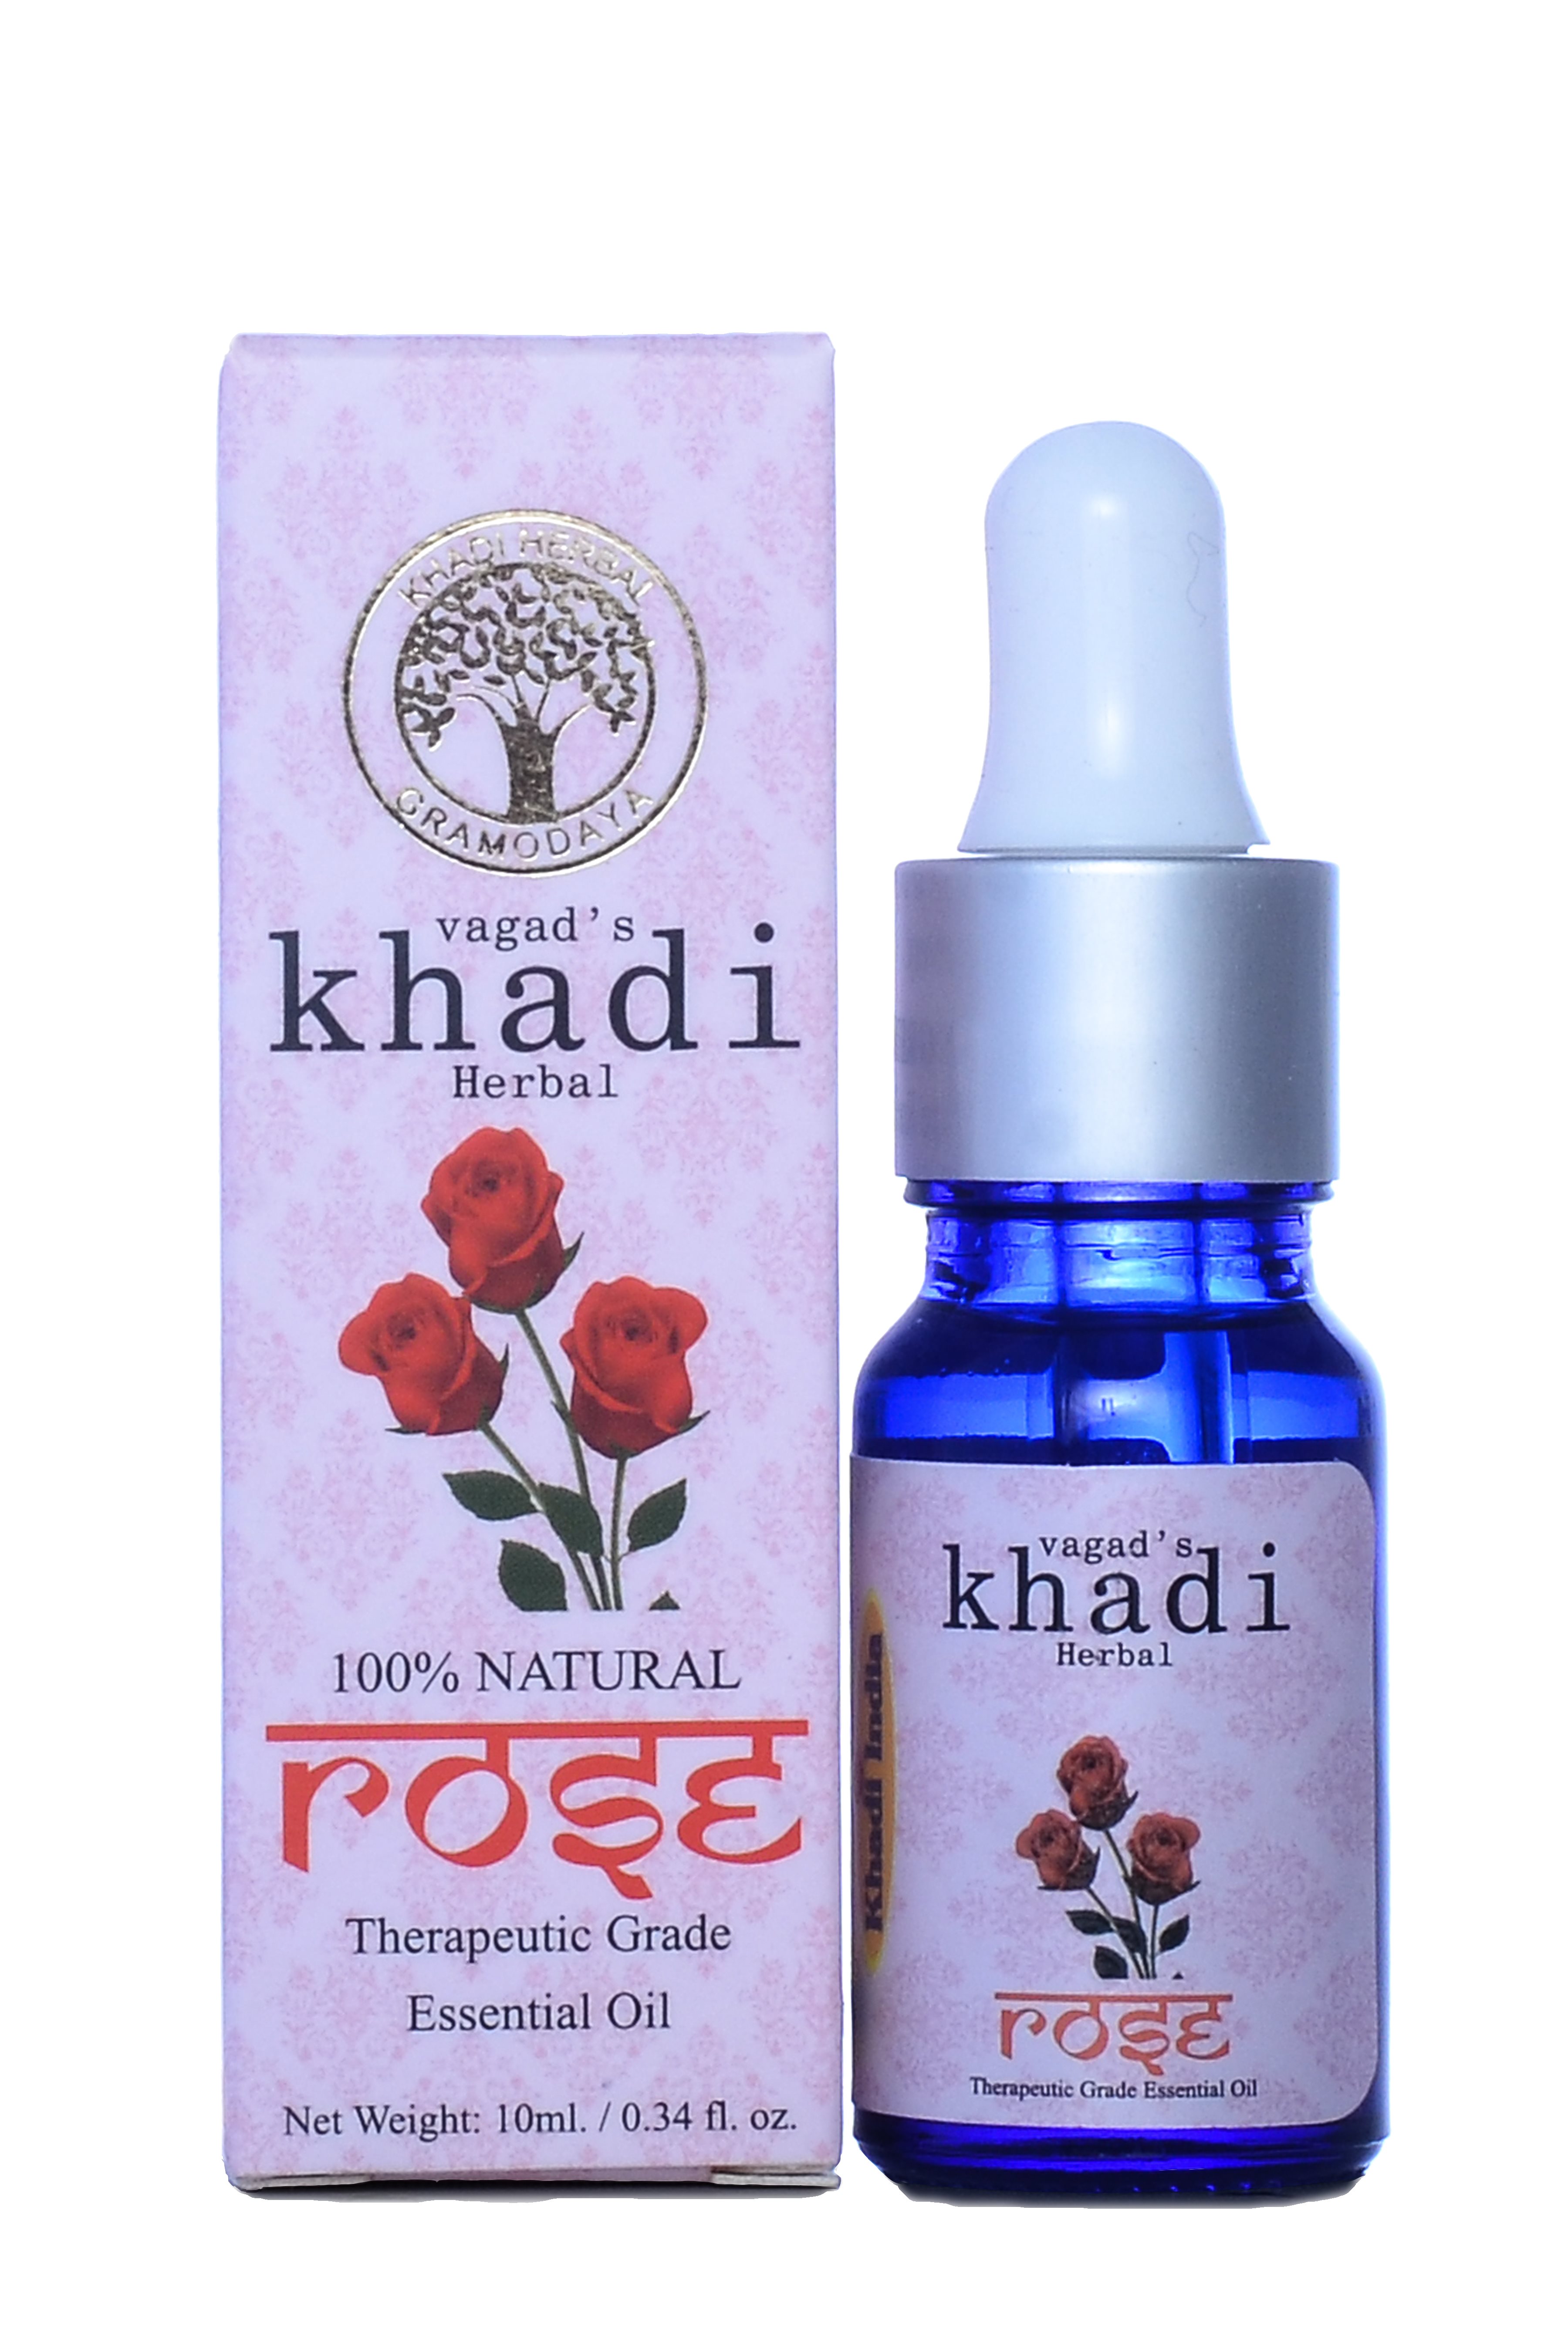 Buy Vagad's Khadi Rose Essential Oil at Best Price Online